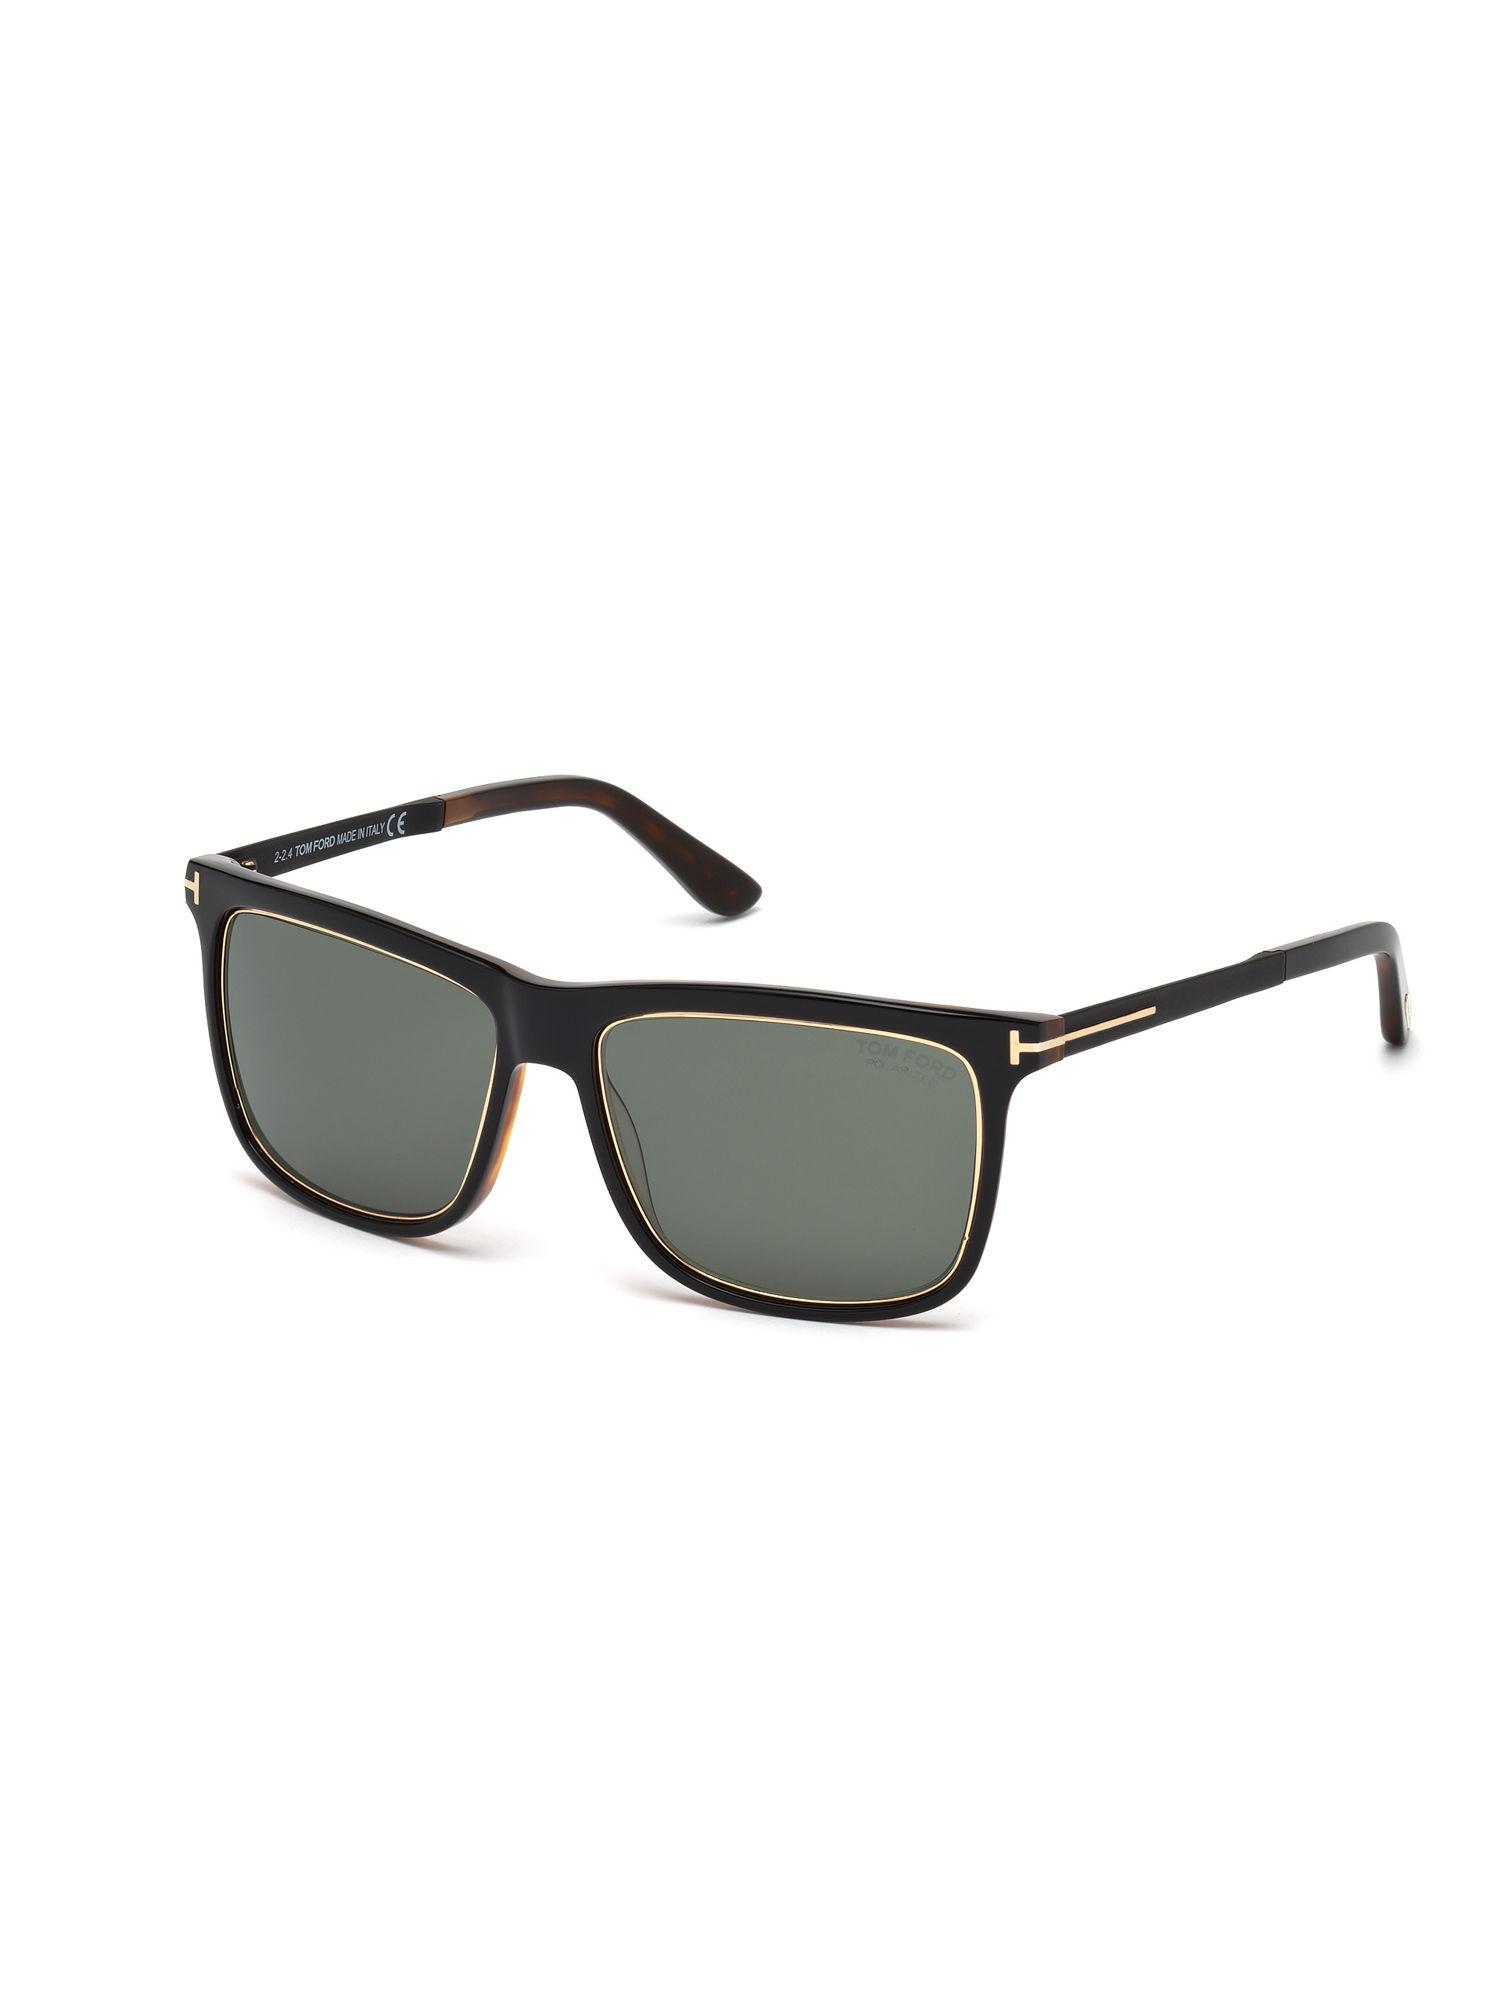 Black Square Sunglasses - FT0392 57 01R